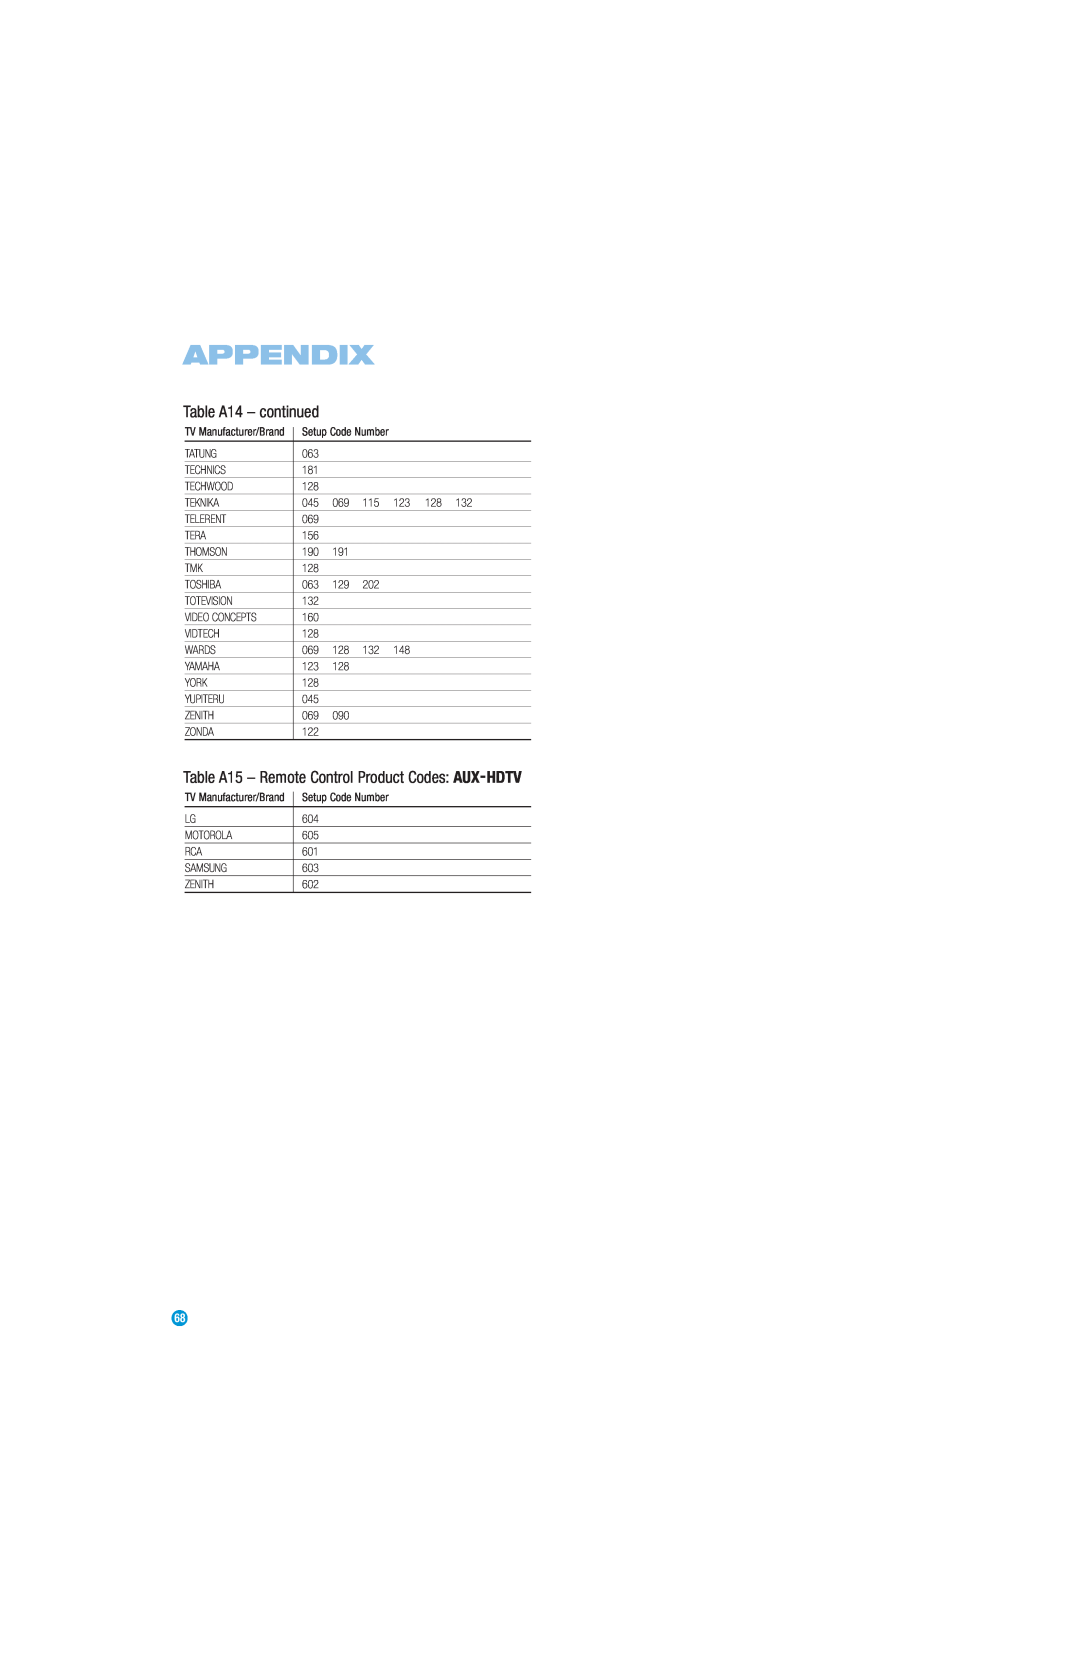 Harman-Kardon AVR 254 owner manual Table A14 - continued, Appendix 